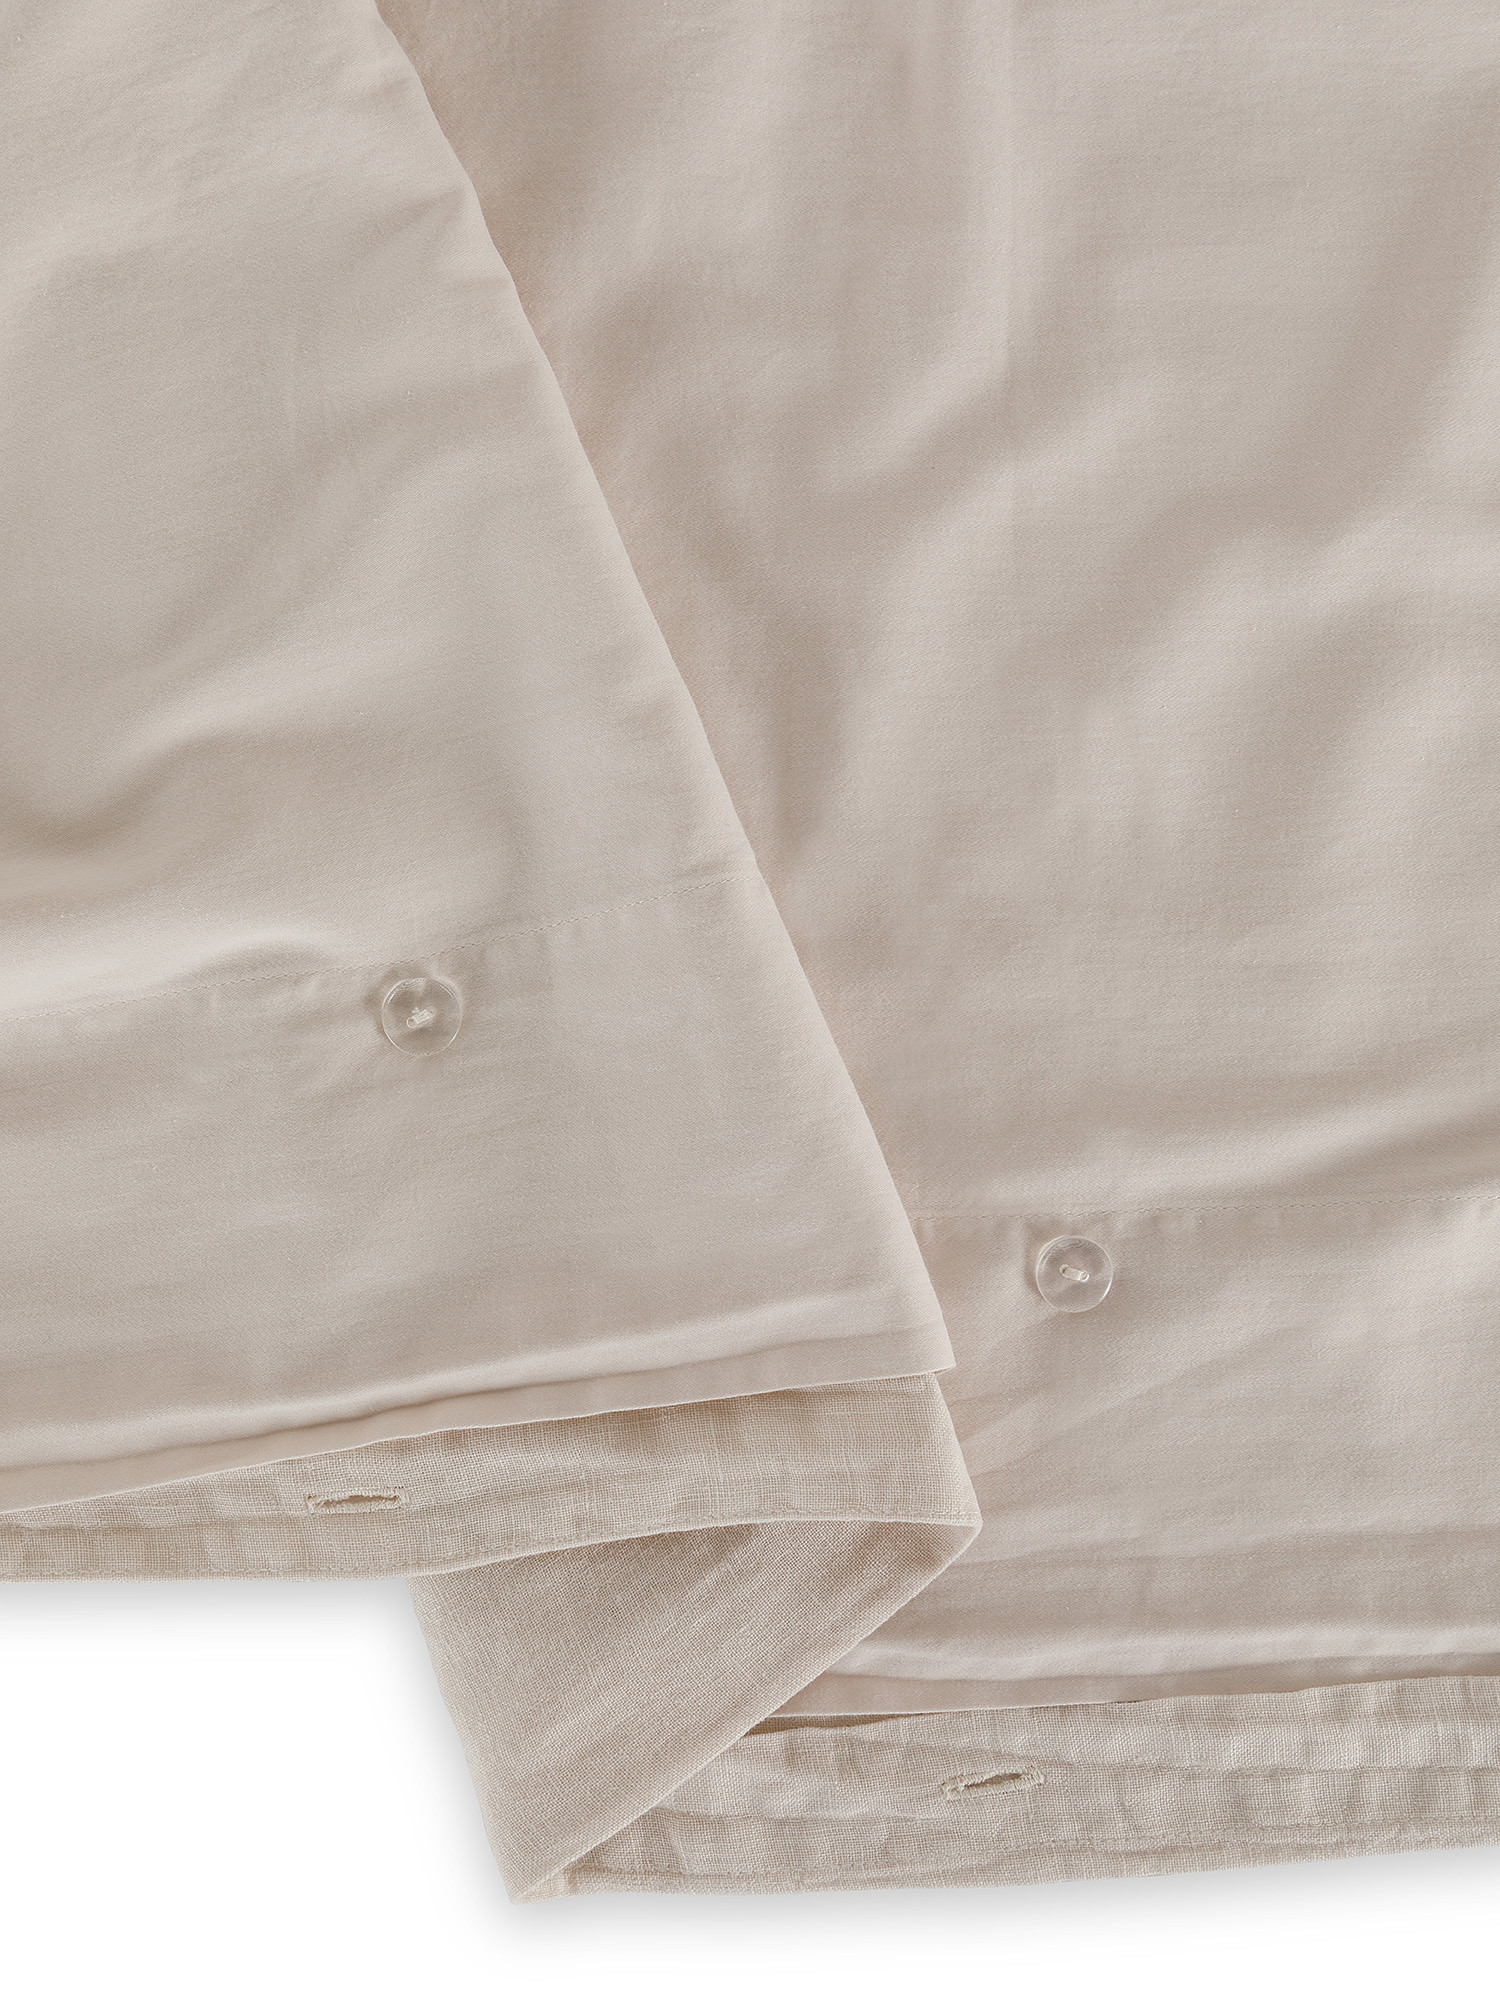 Zefiro solid color linen and cotton duvet cover, Light Beige, large image number 2